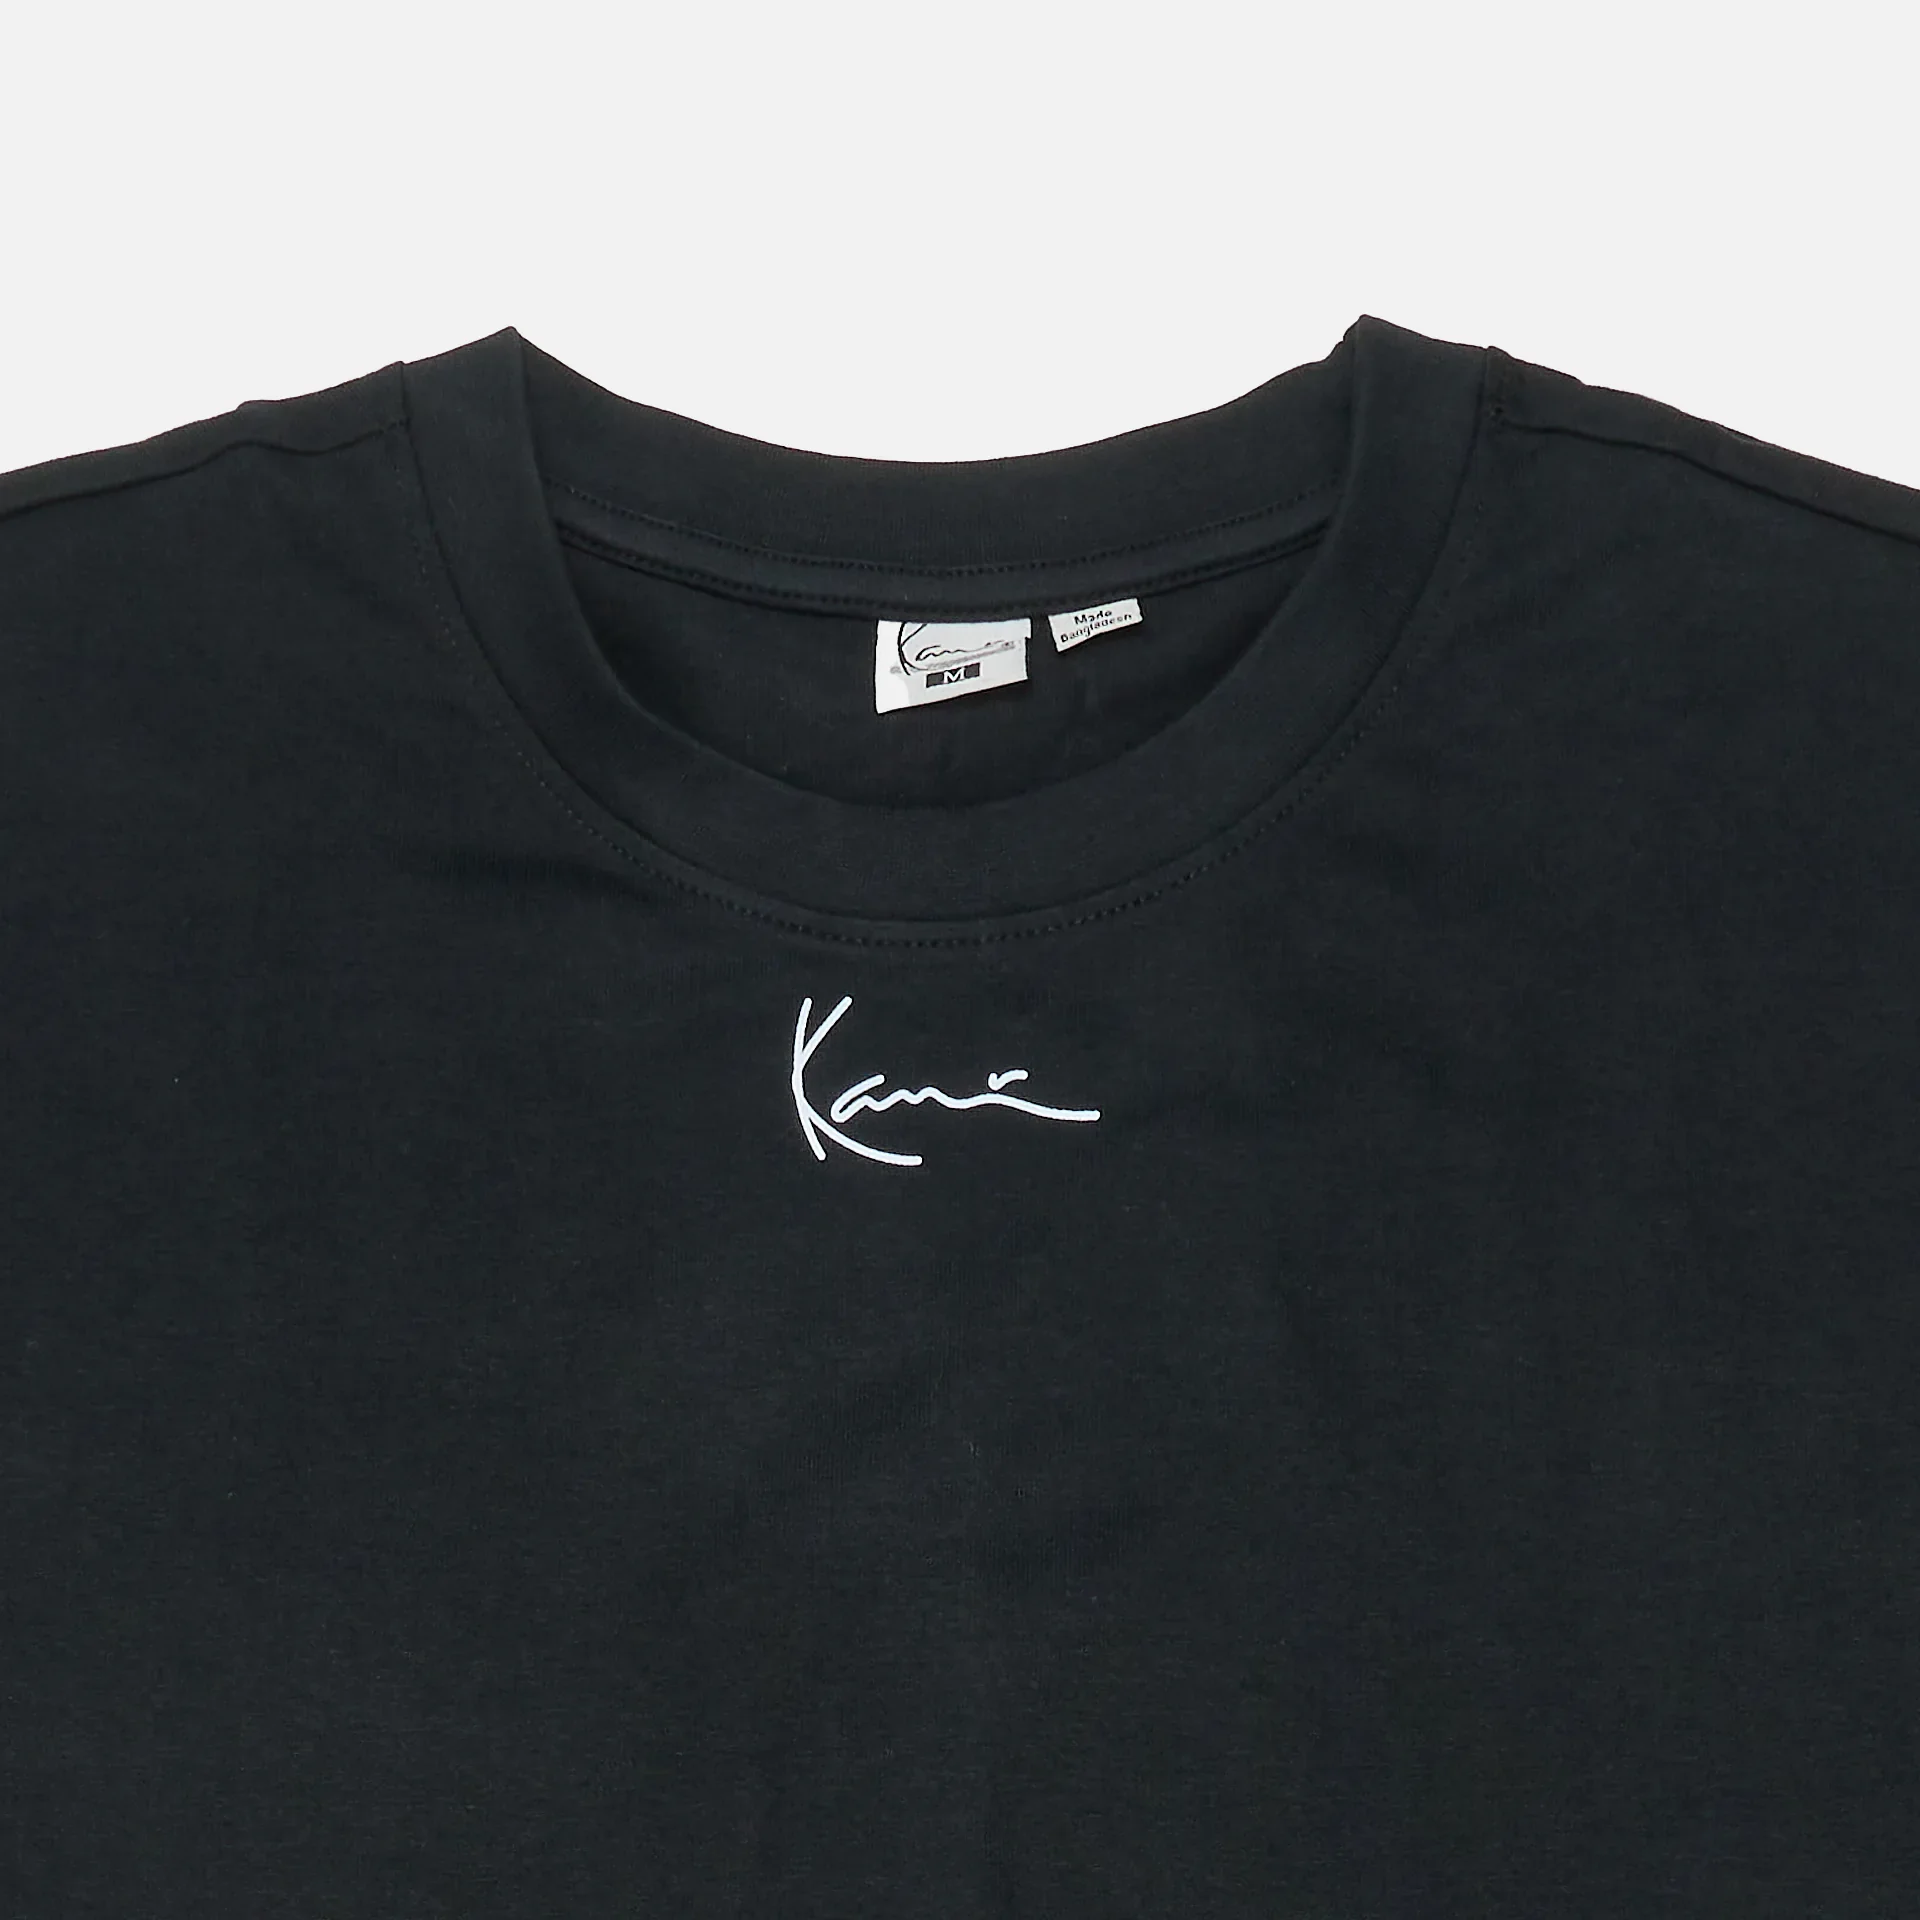 Karl Kani Small Signature Boxy Kani Night Rider T-Shirt Black